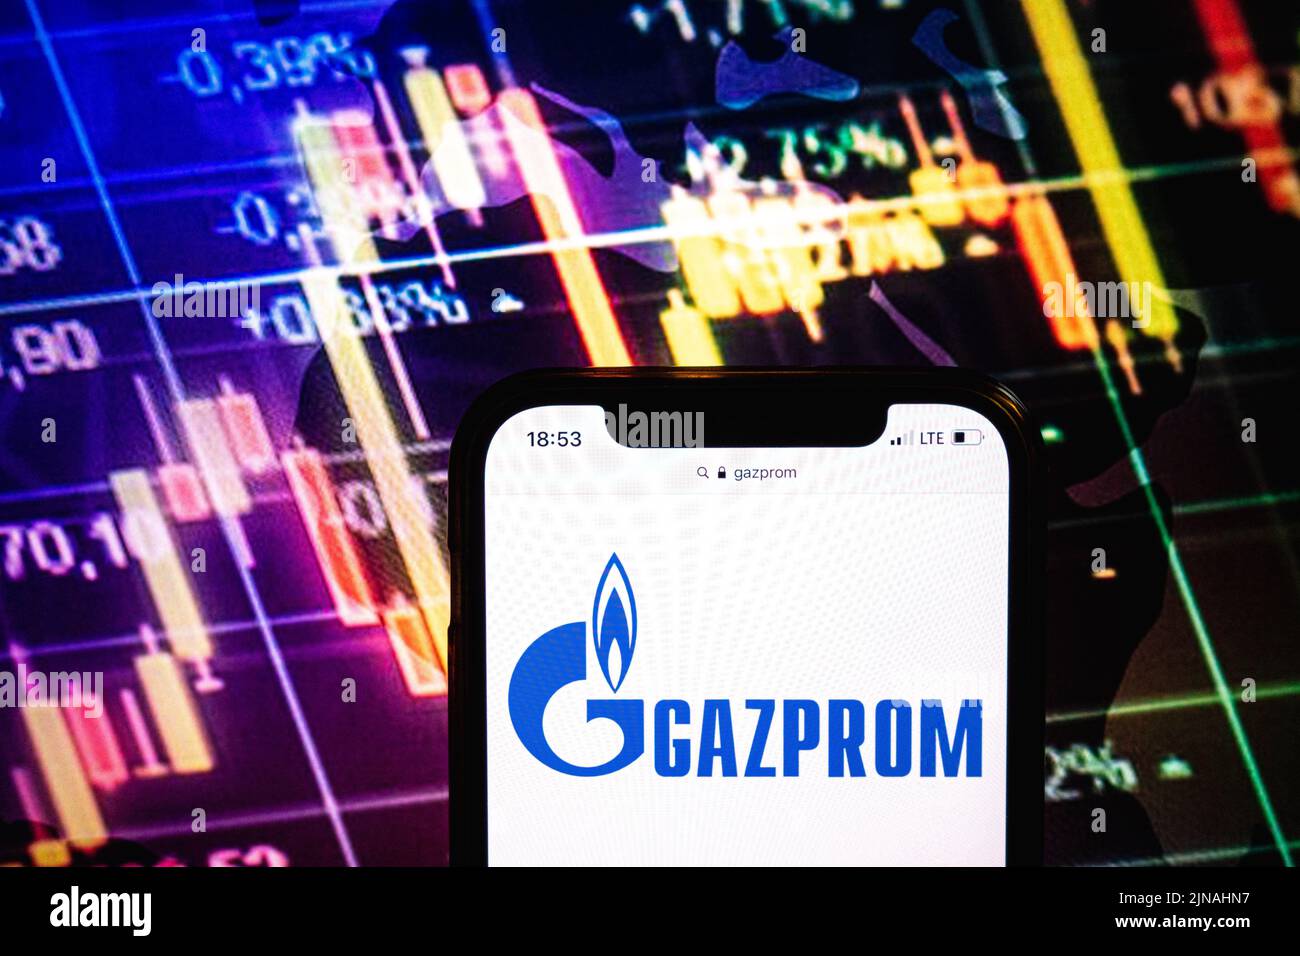 KONSKIE, POLAND - August 09, 2022: Smartphone displaying logo of Gazprom company on stock exchange diagram background Stock Photo